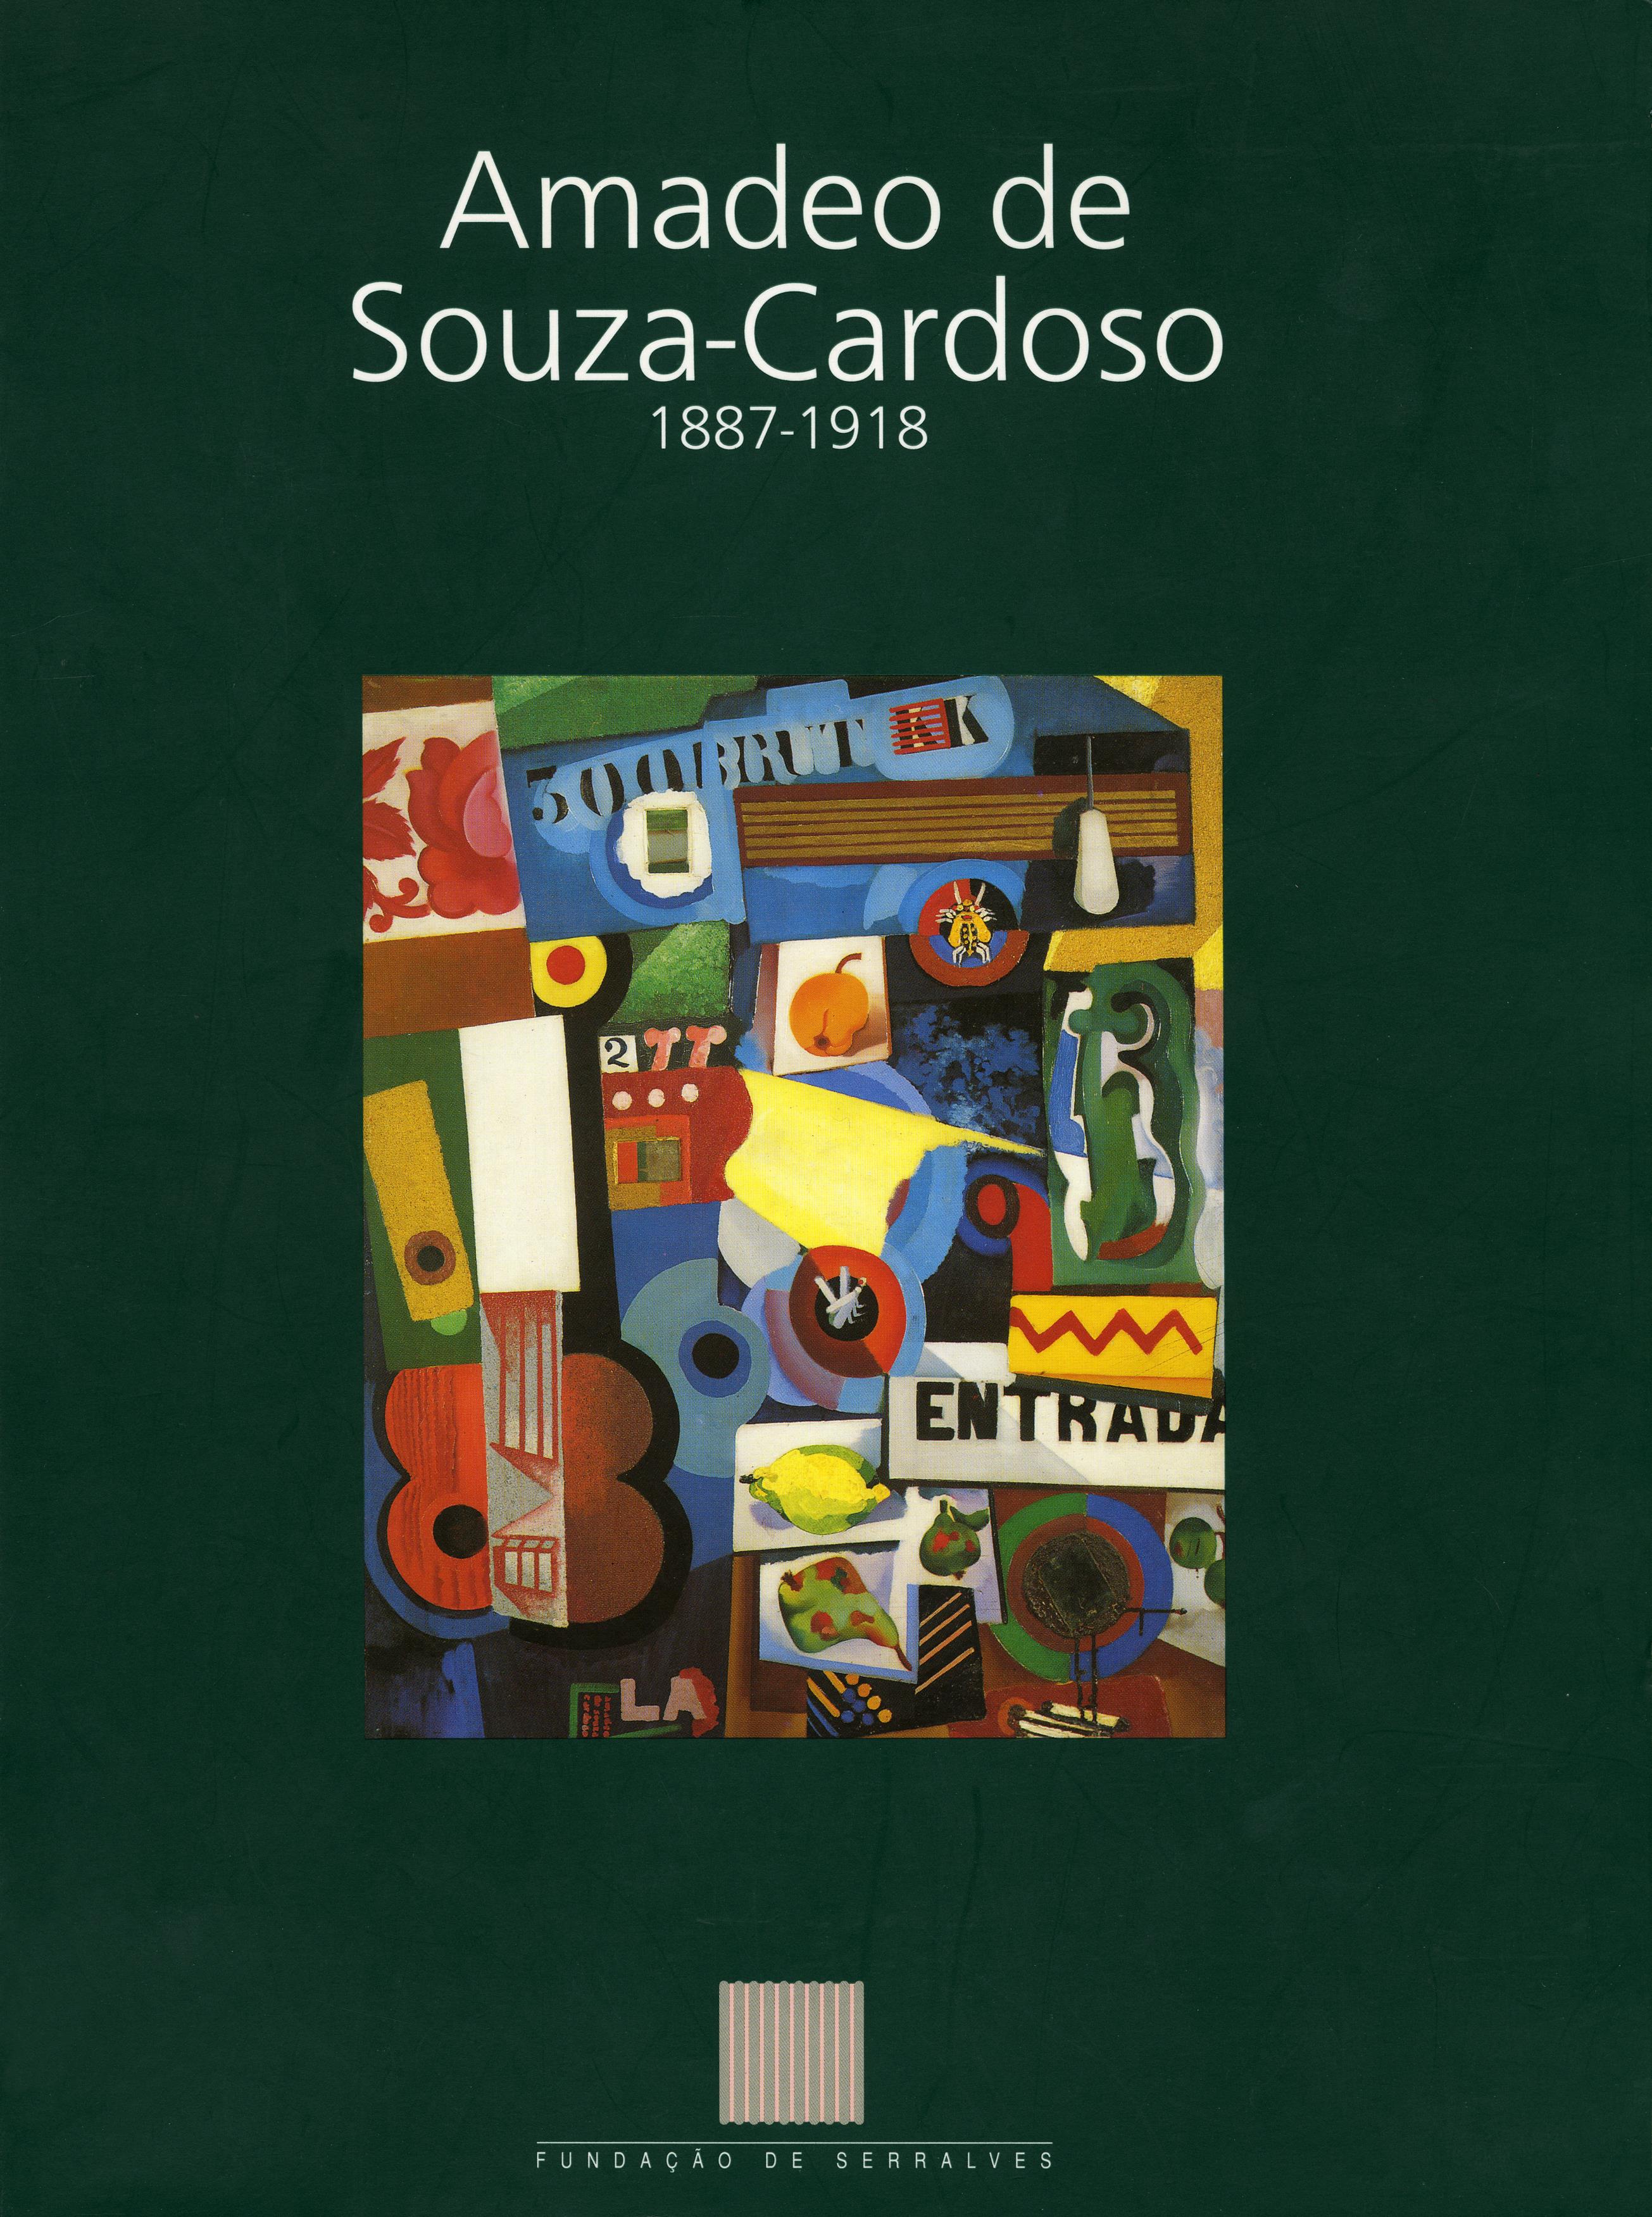 Amadeo de Souza-Cardoso (1887 – 1918)